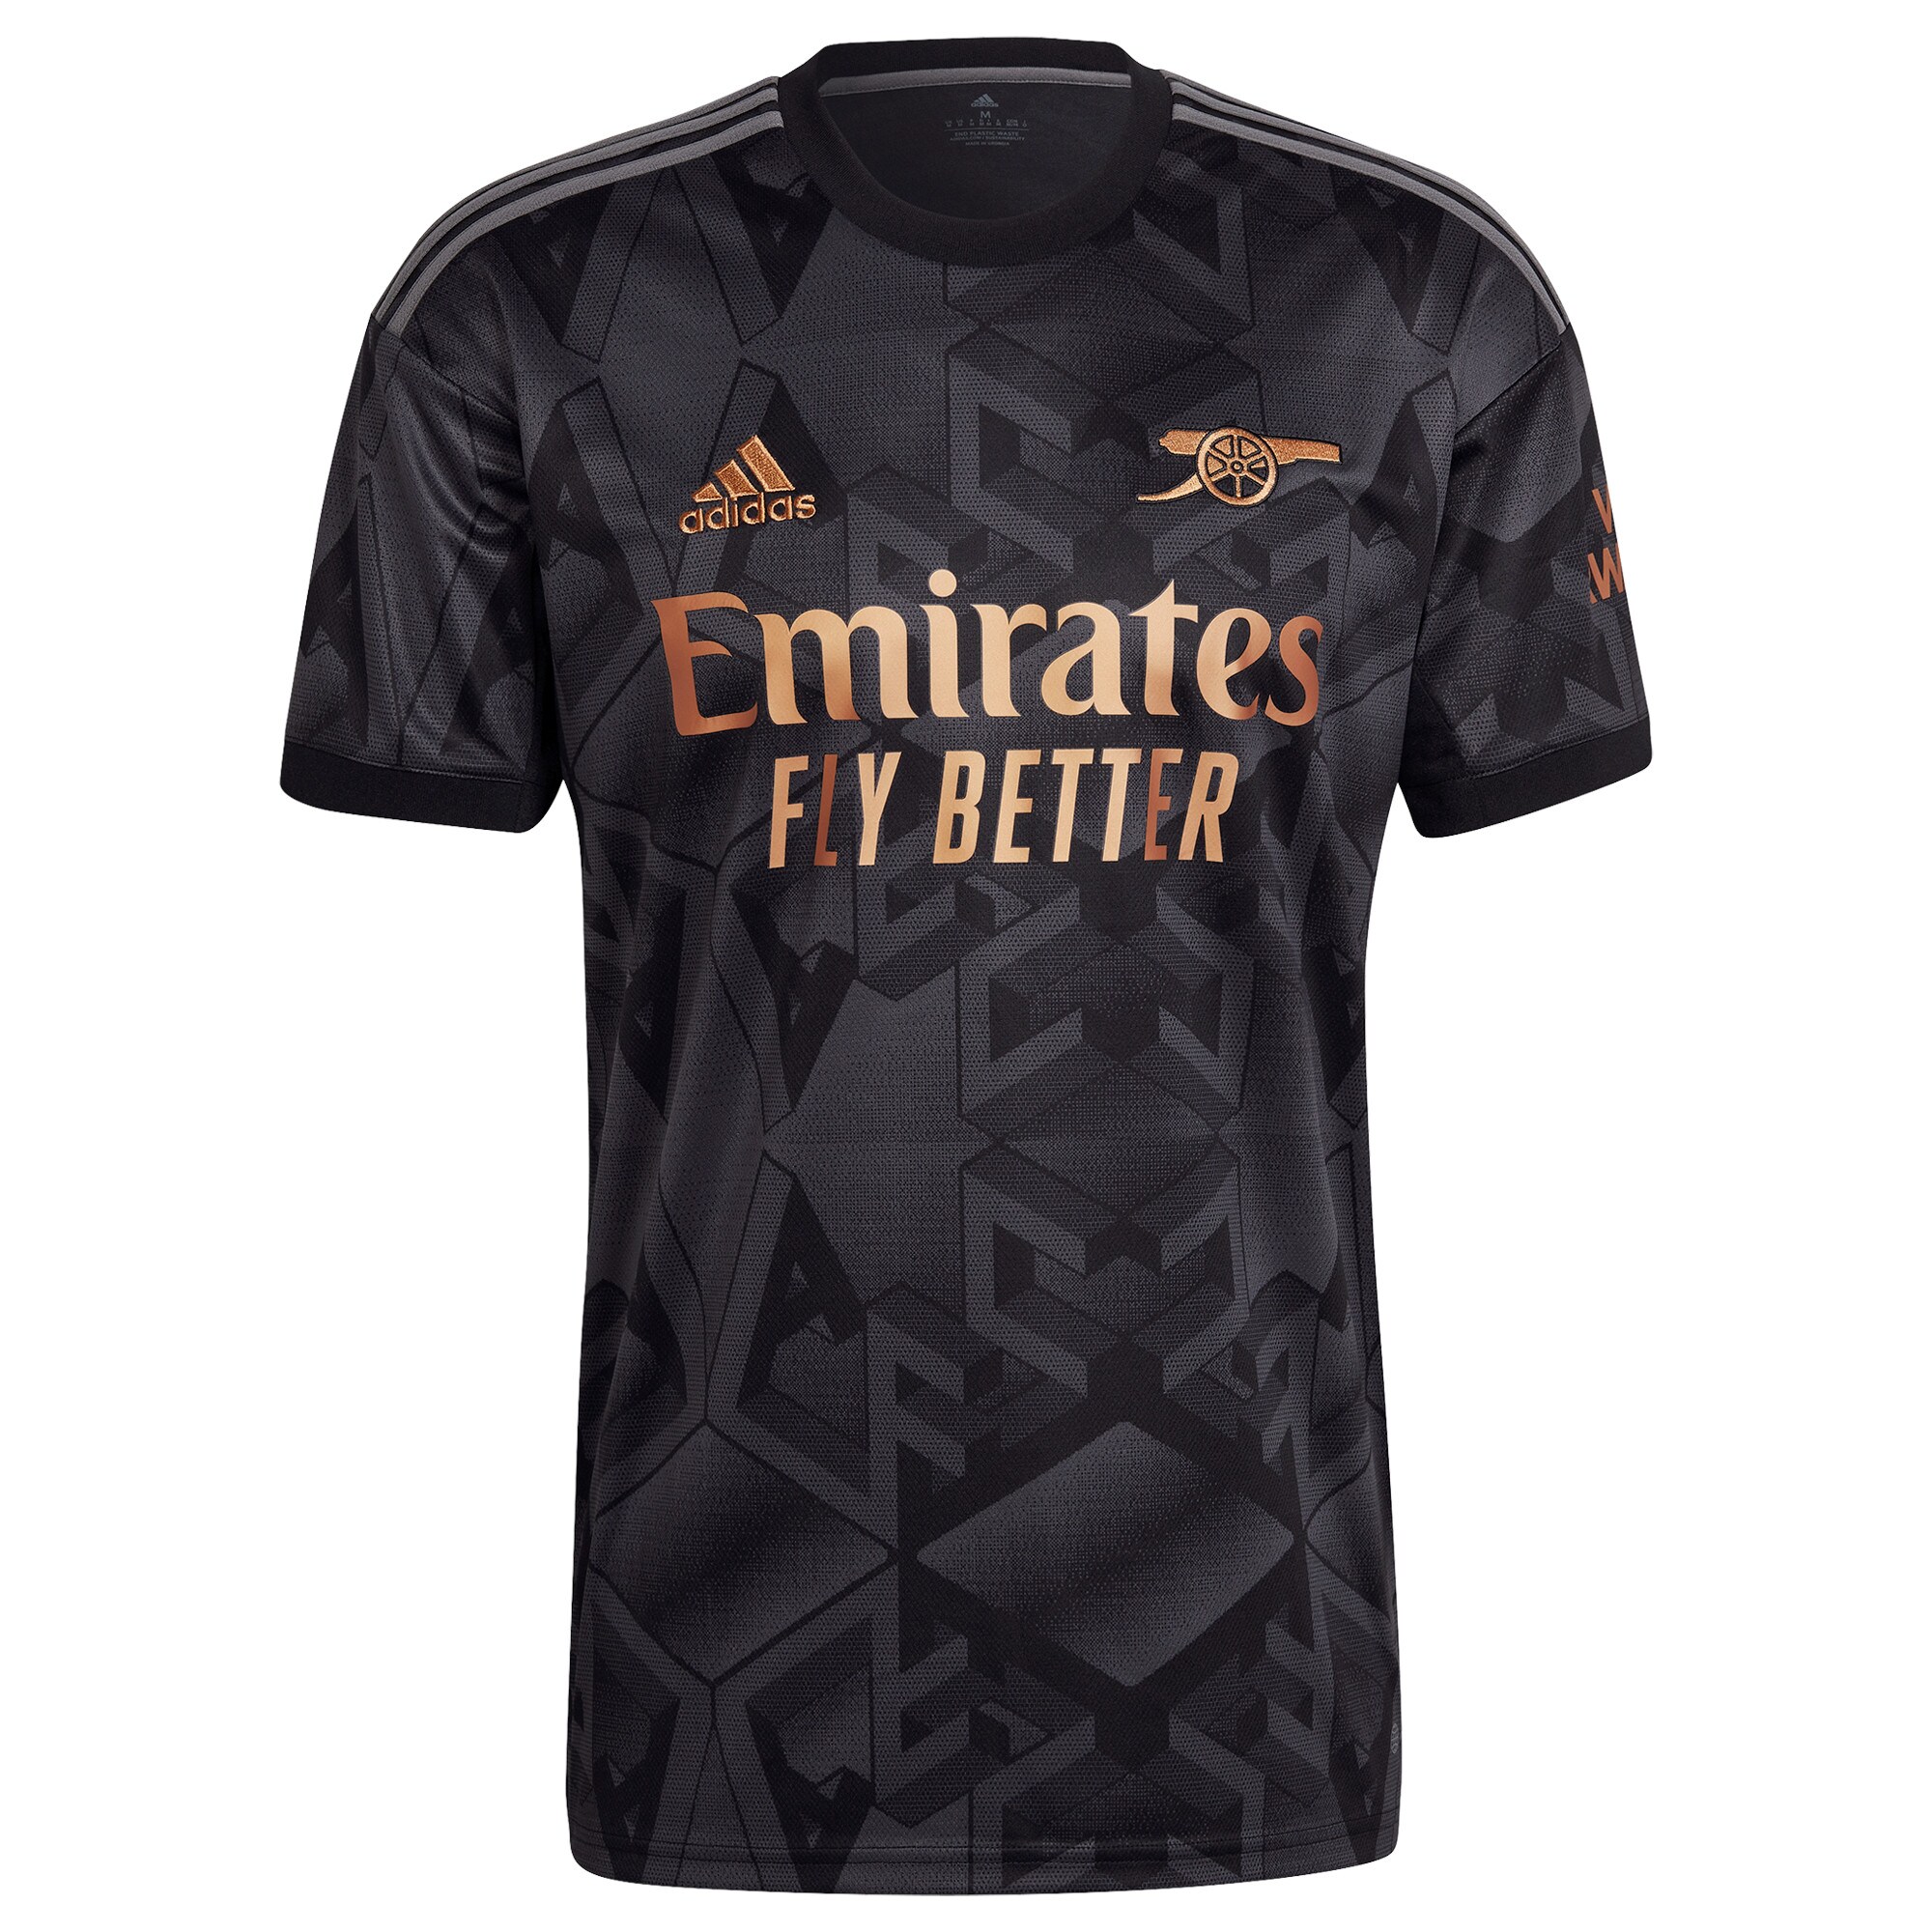 Arsenal Away Shirt 2022-2023 with Martinelli 11 printing